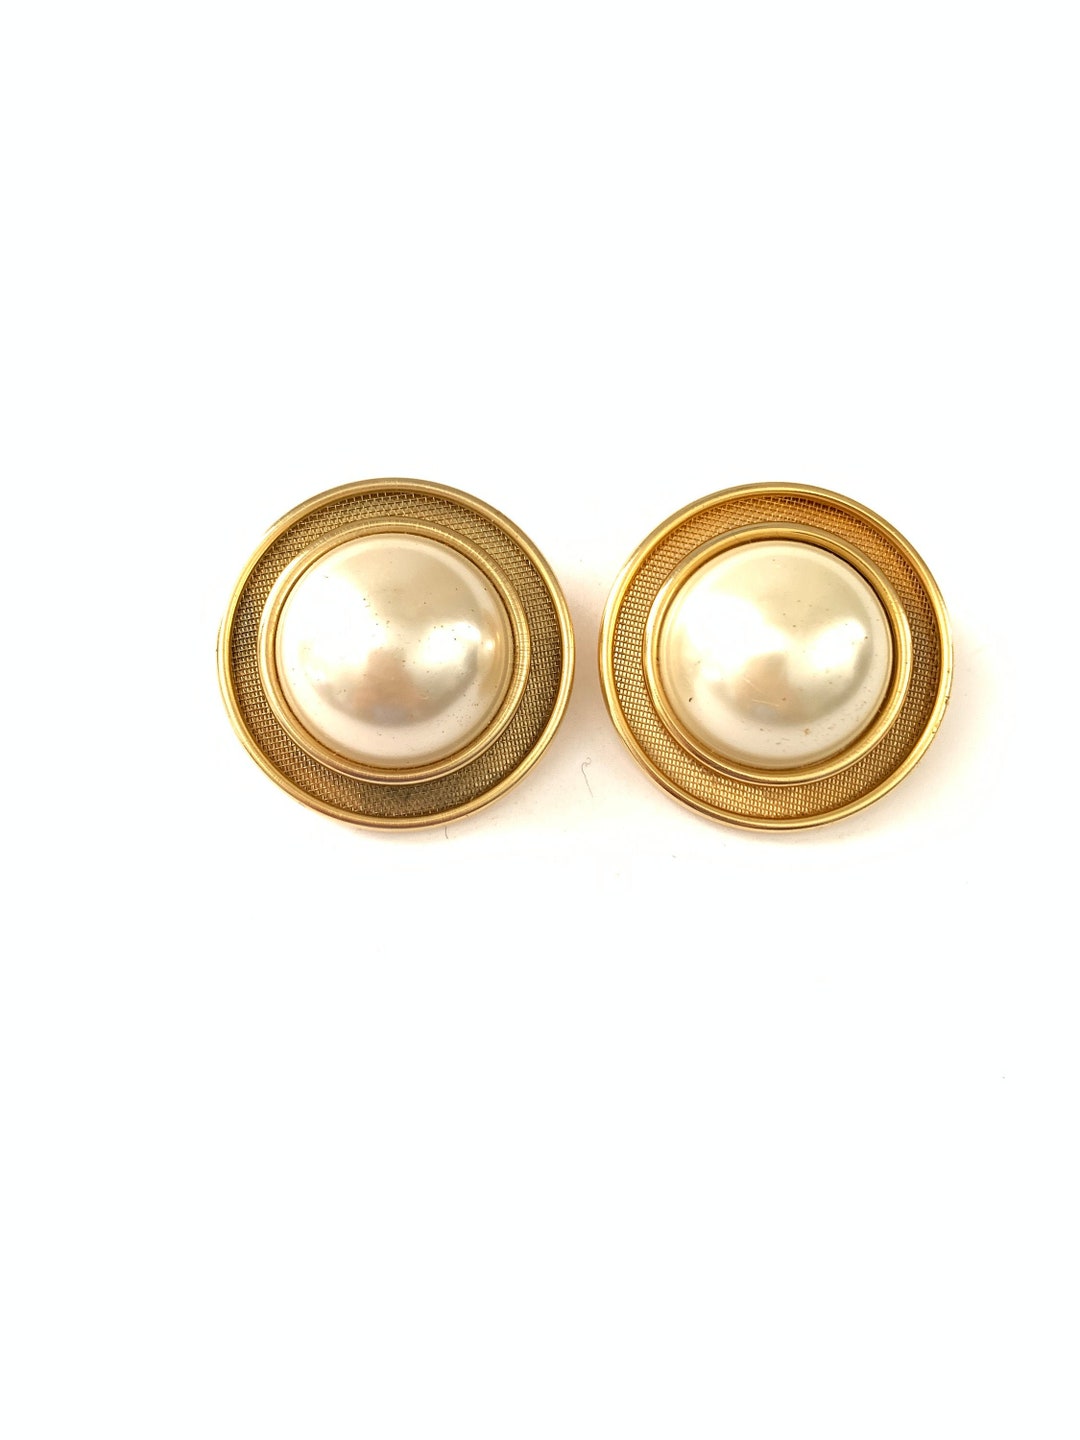 MASSIVE Vintage Pearl Clip on Earrings With Mesh Edges 1 1/2 Diameter ...